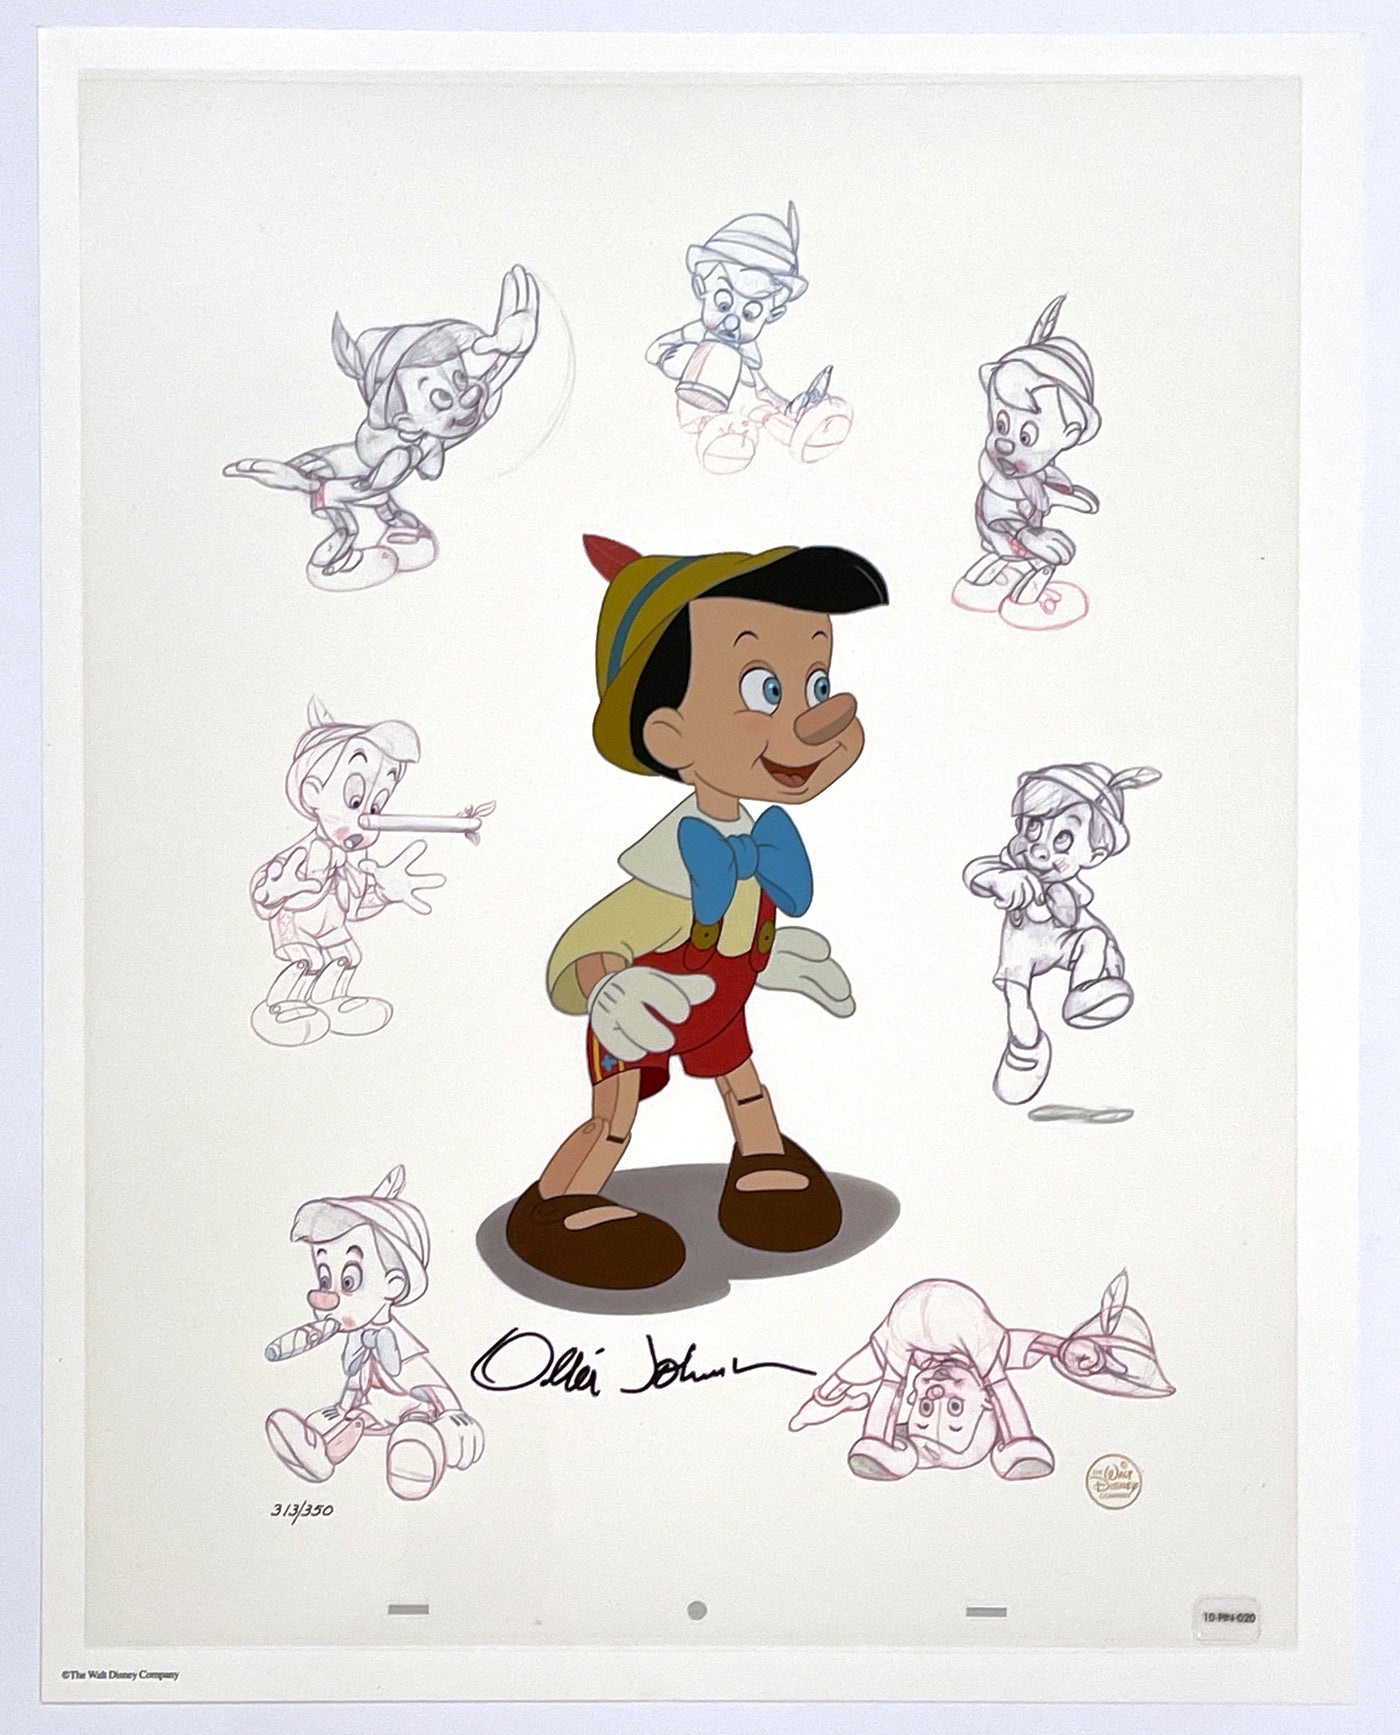 Original Walt Disney Limited Edition Masters Series featuring Pinocchio